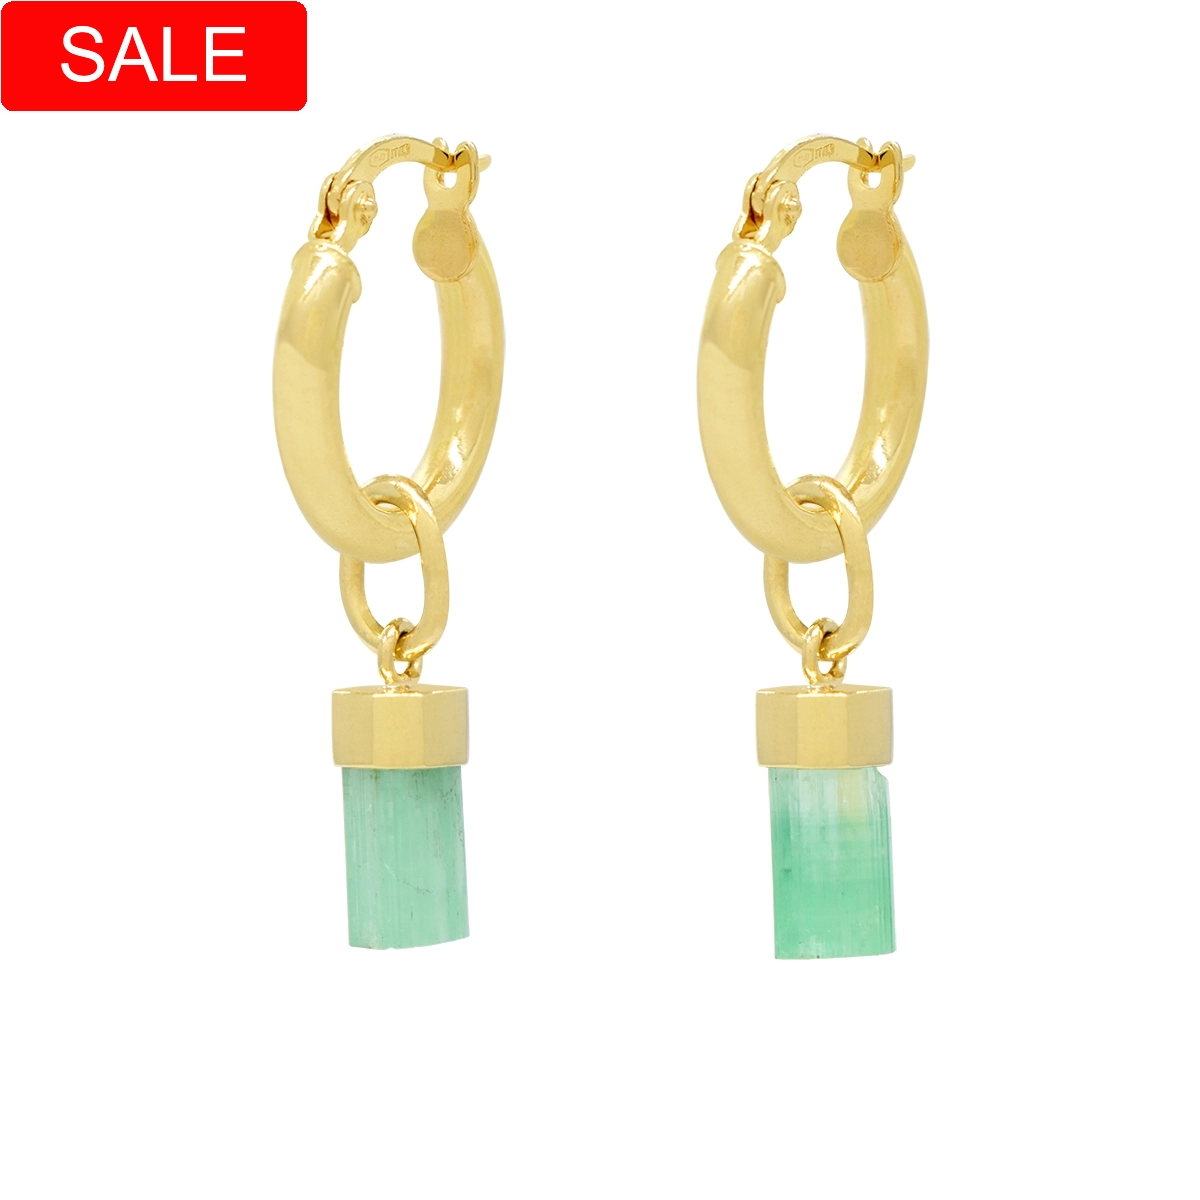 Uncut Raw Natural Emerald Earrings in 18K Yellow Gold Hoops